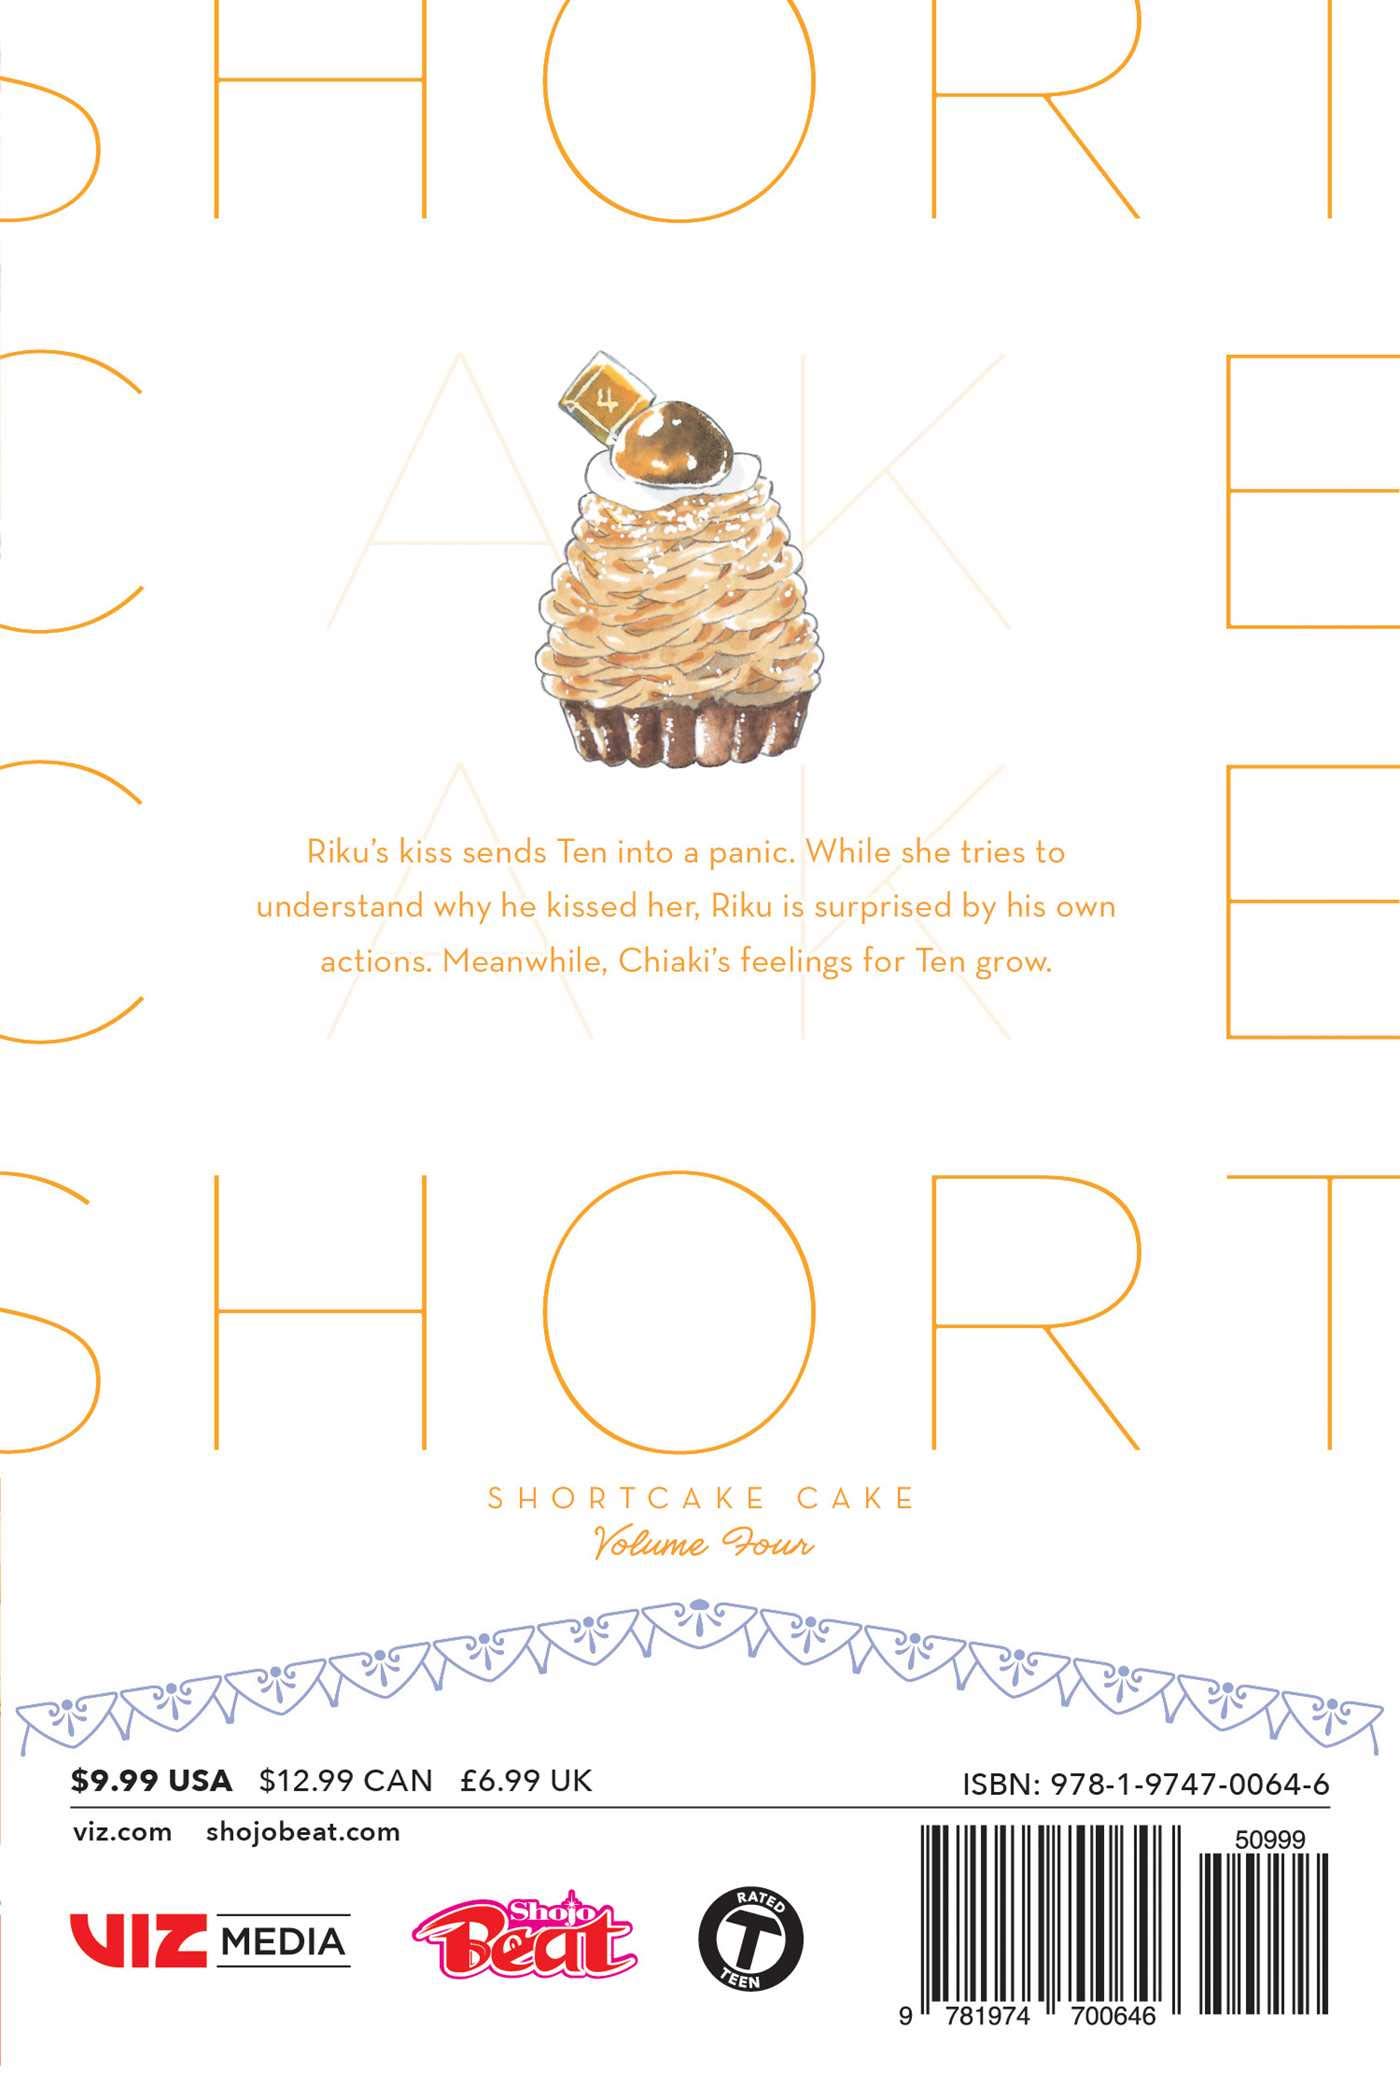 Shortcake Cake - Volume 4 | Suu Morishita